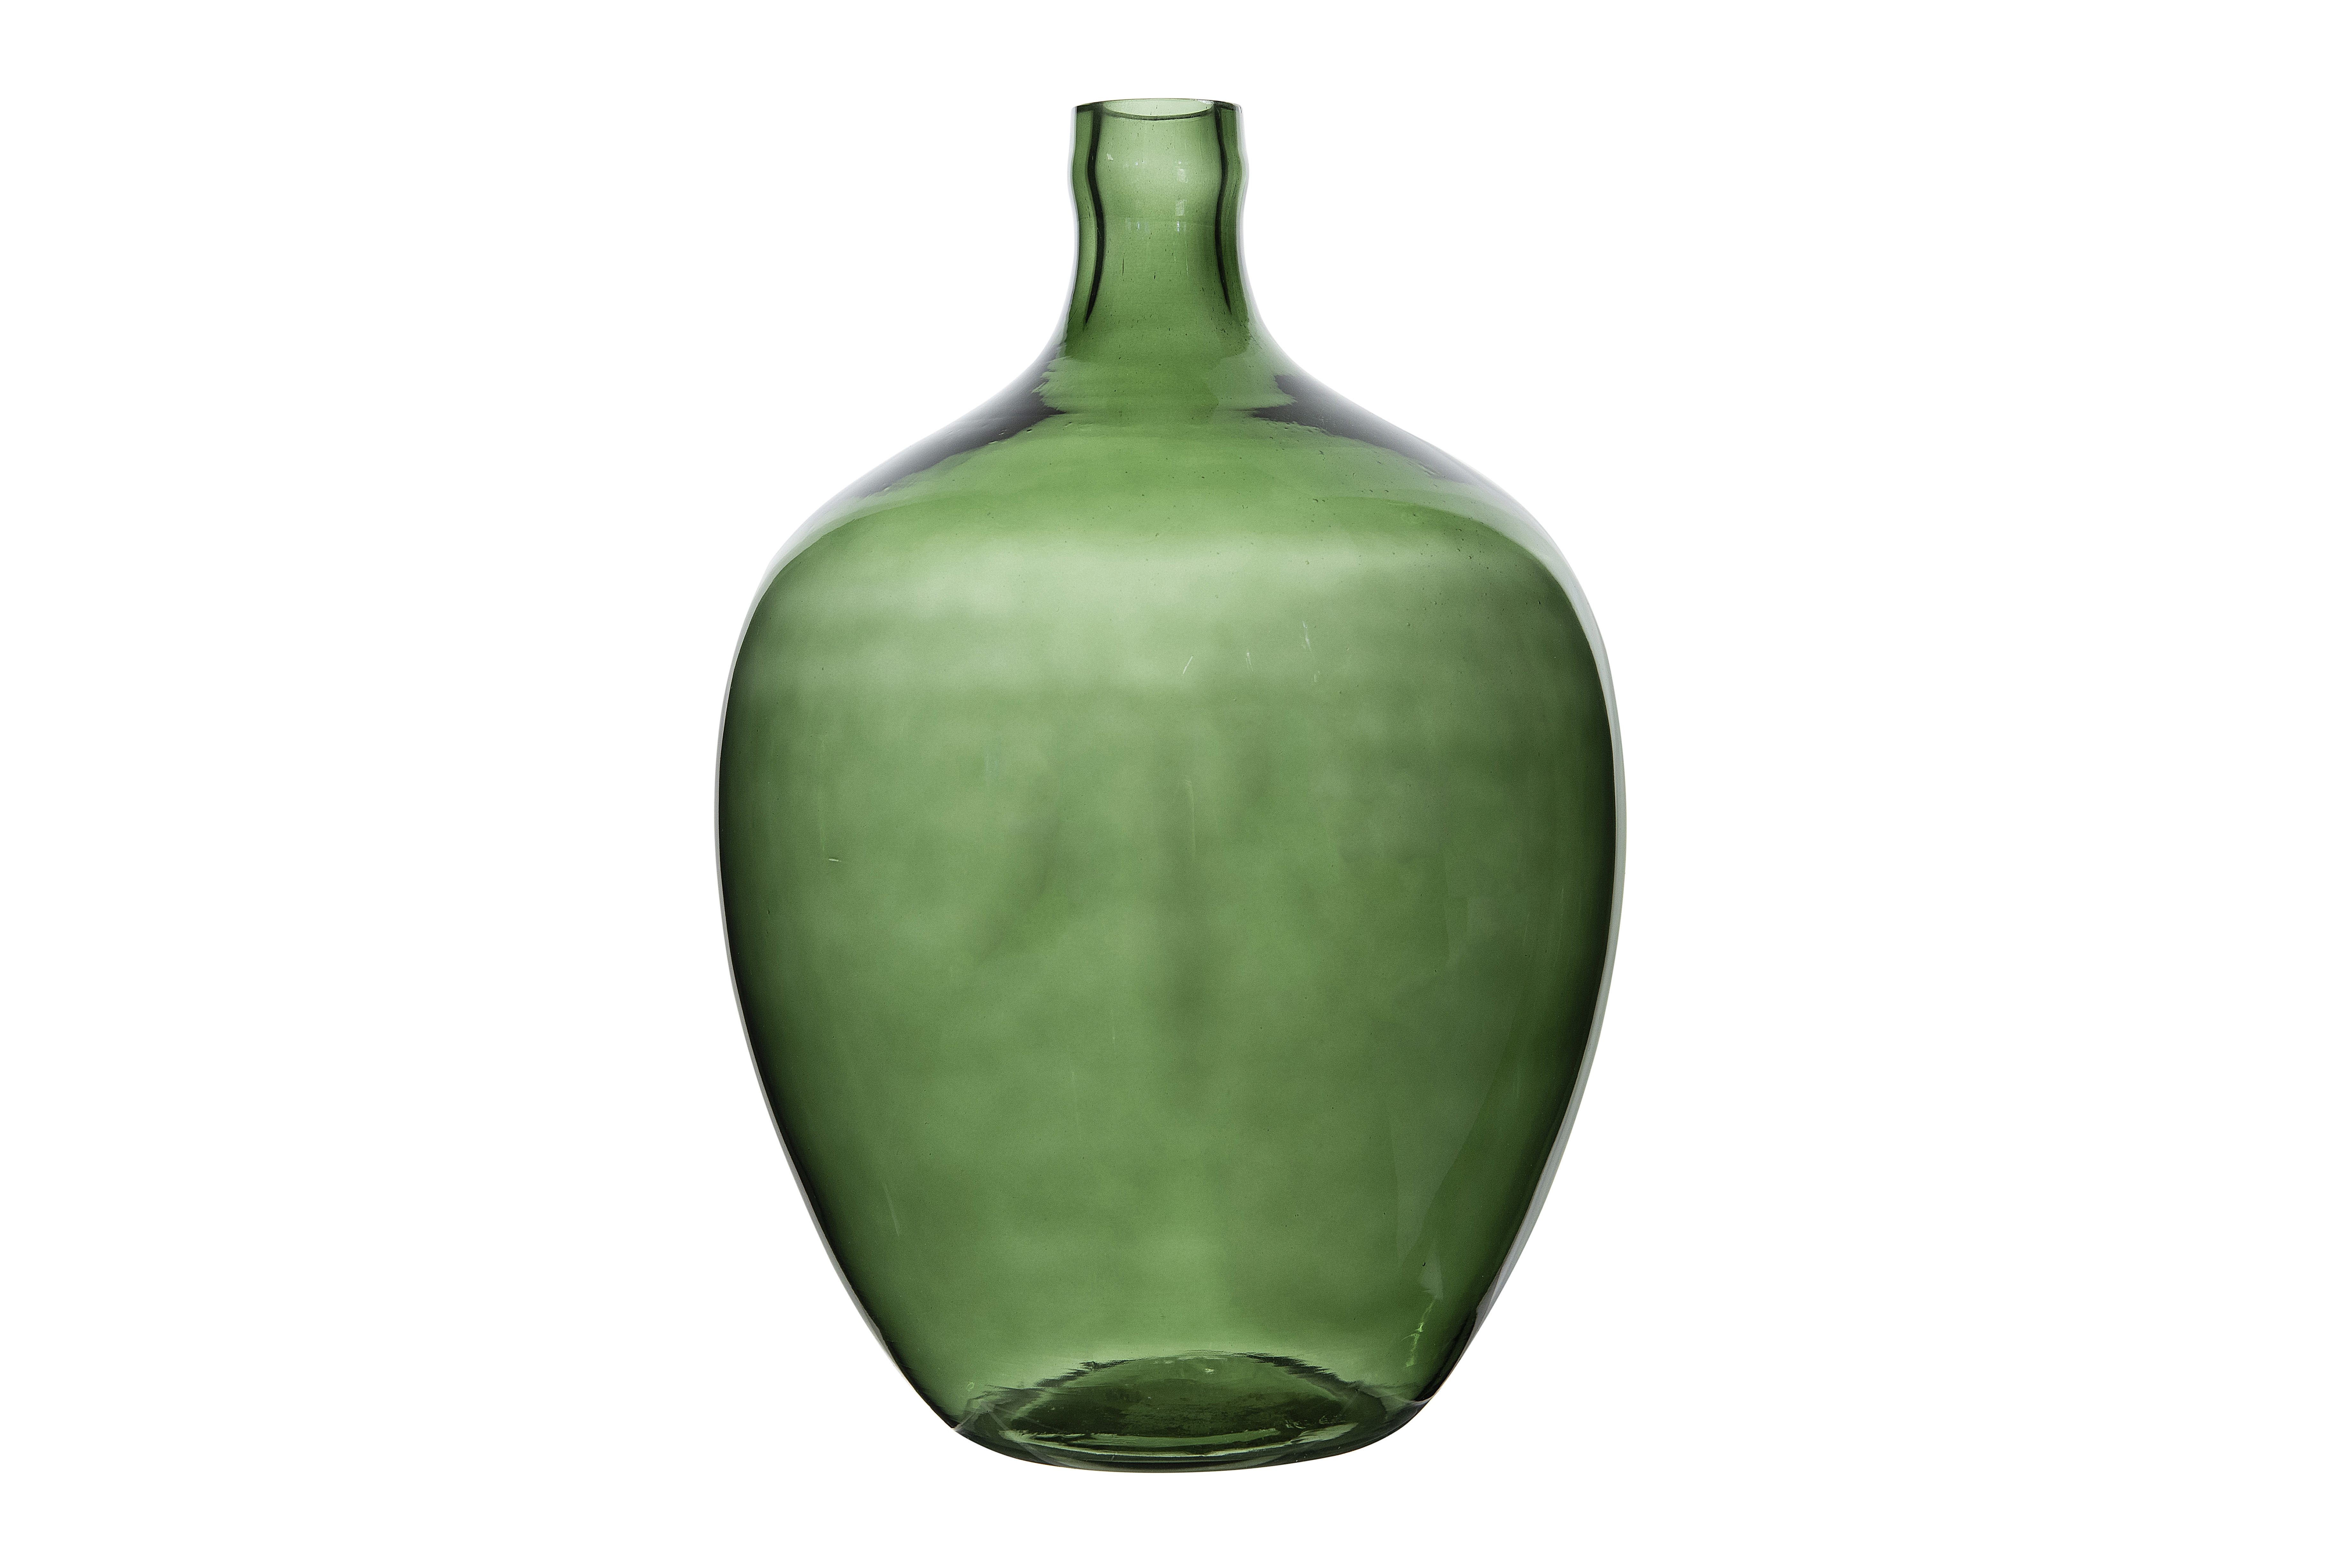 Vintage Reproduction Transparent Green Glass Bottle - Image 0